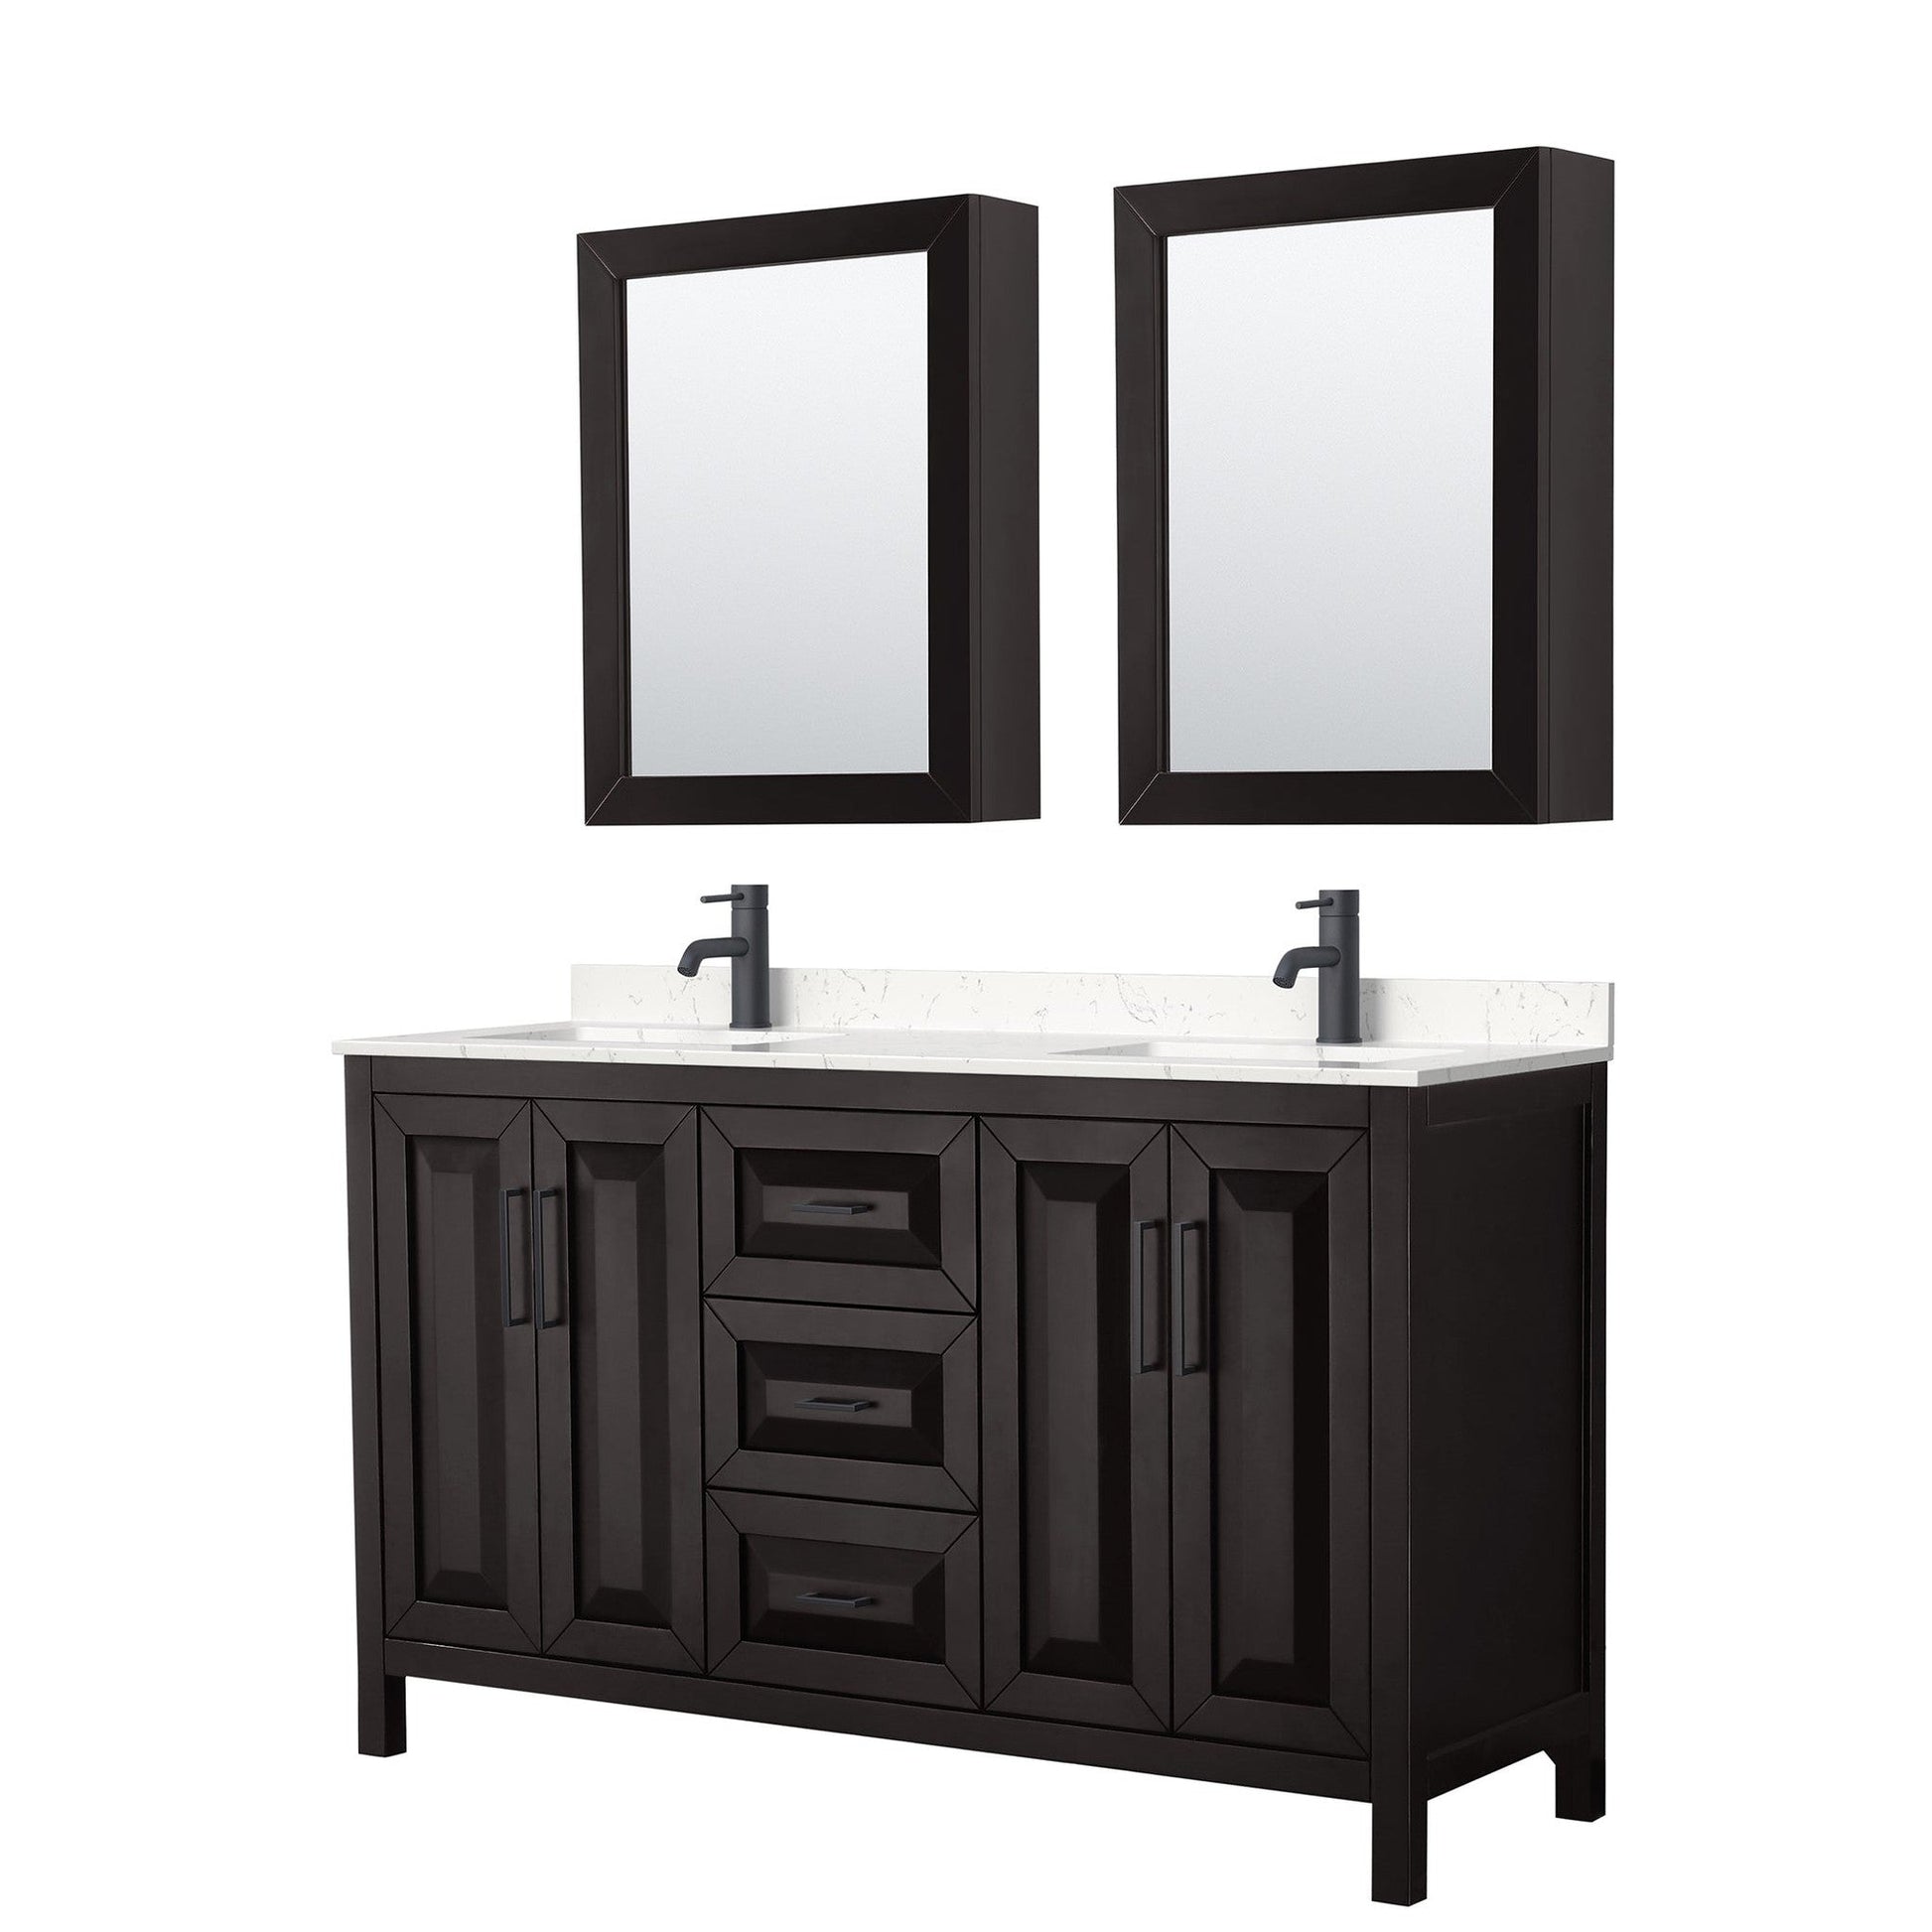 Daria 60" Double Bathroom Vanity in Dark Espresso, Carrara Cultured Marble Countertop, Undermount Square Sinks, Matte Black Trim, Medicine Cabinets